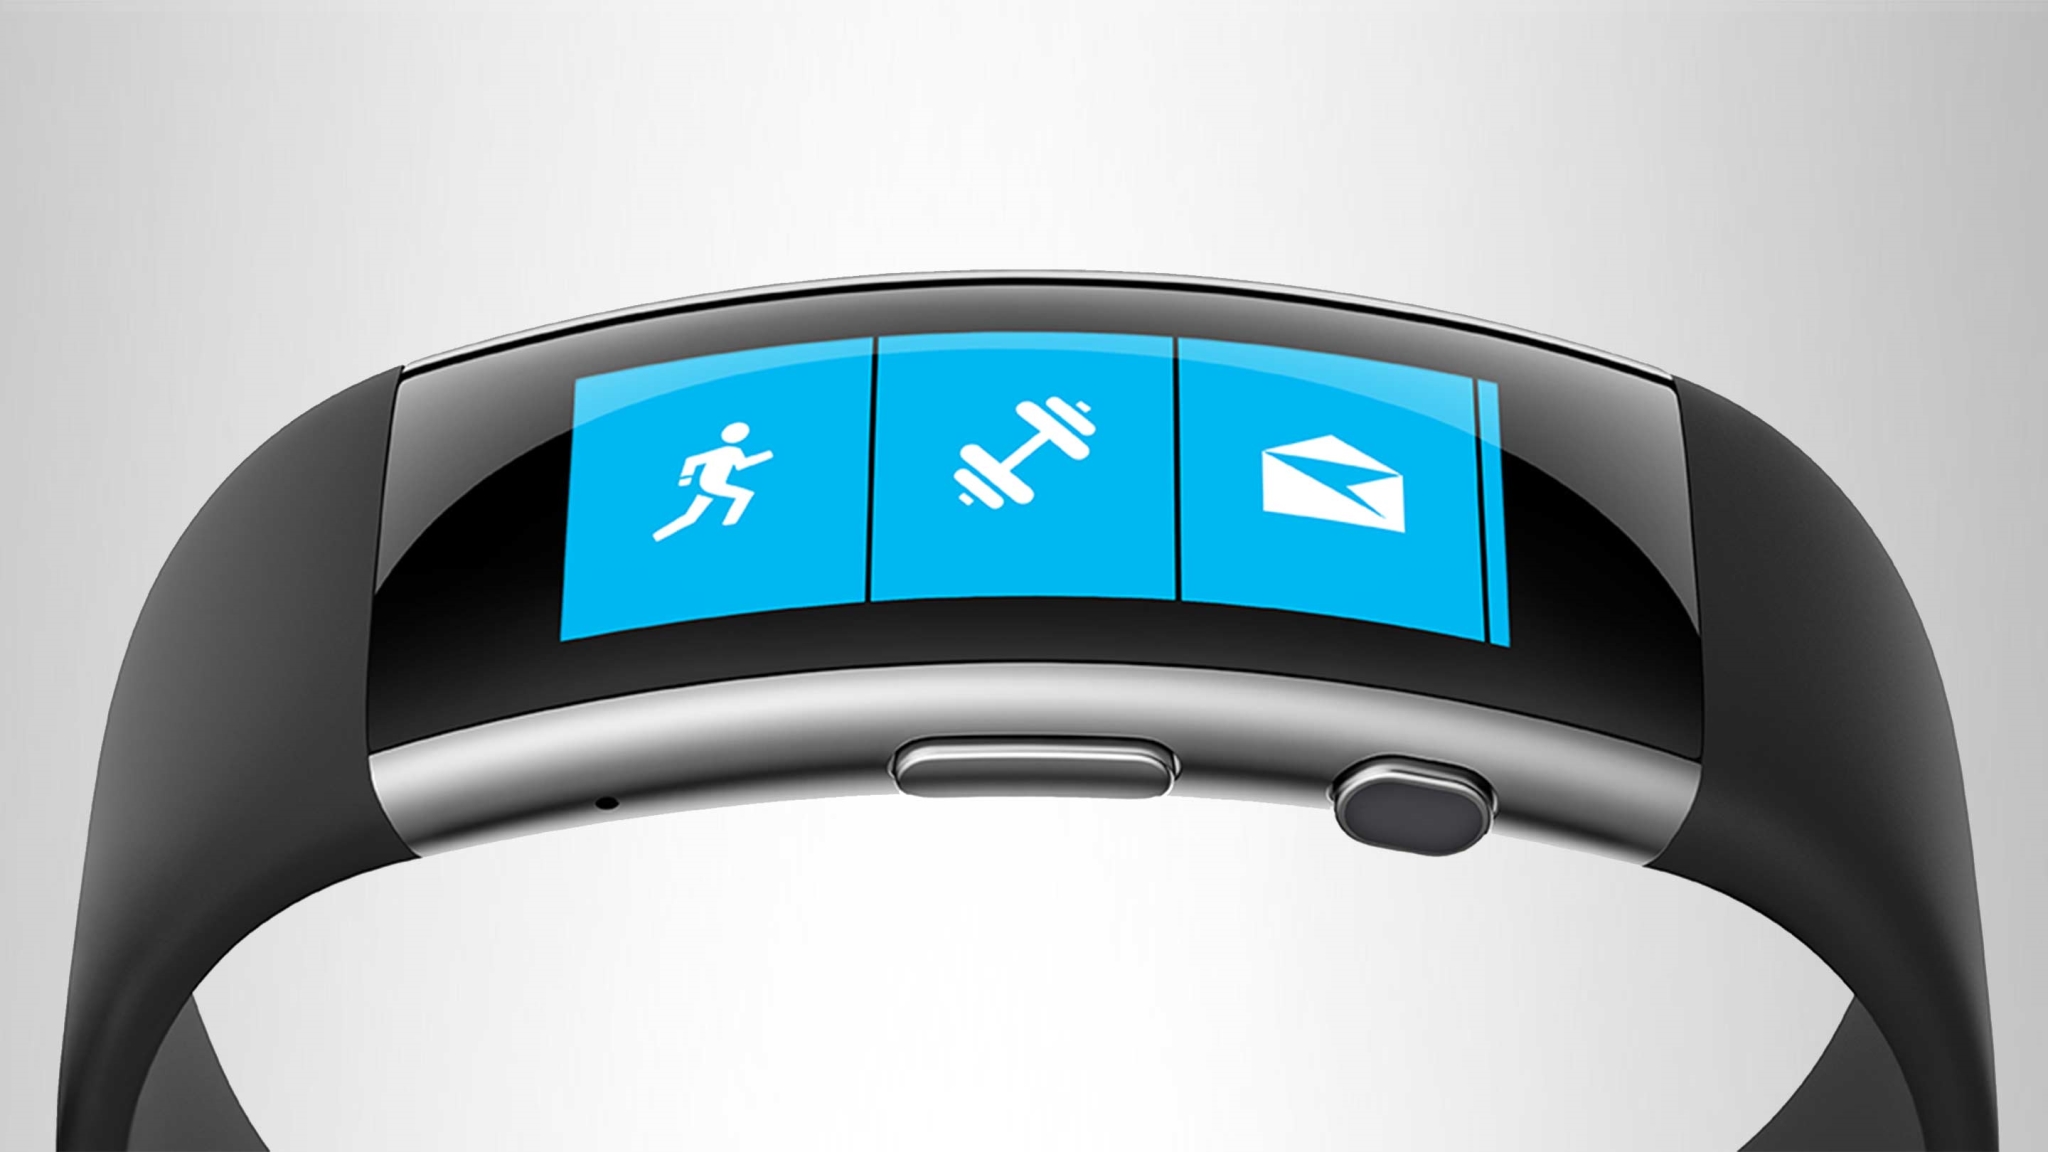 Microsoft debuts new fitness tracker